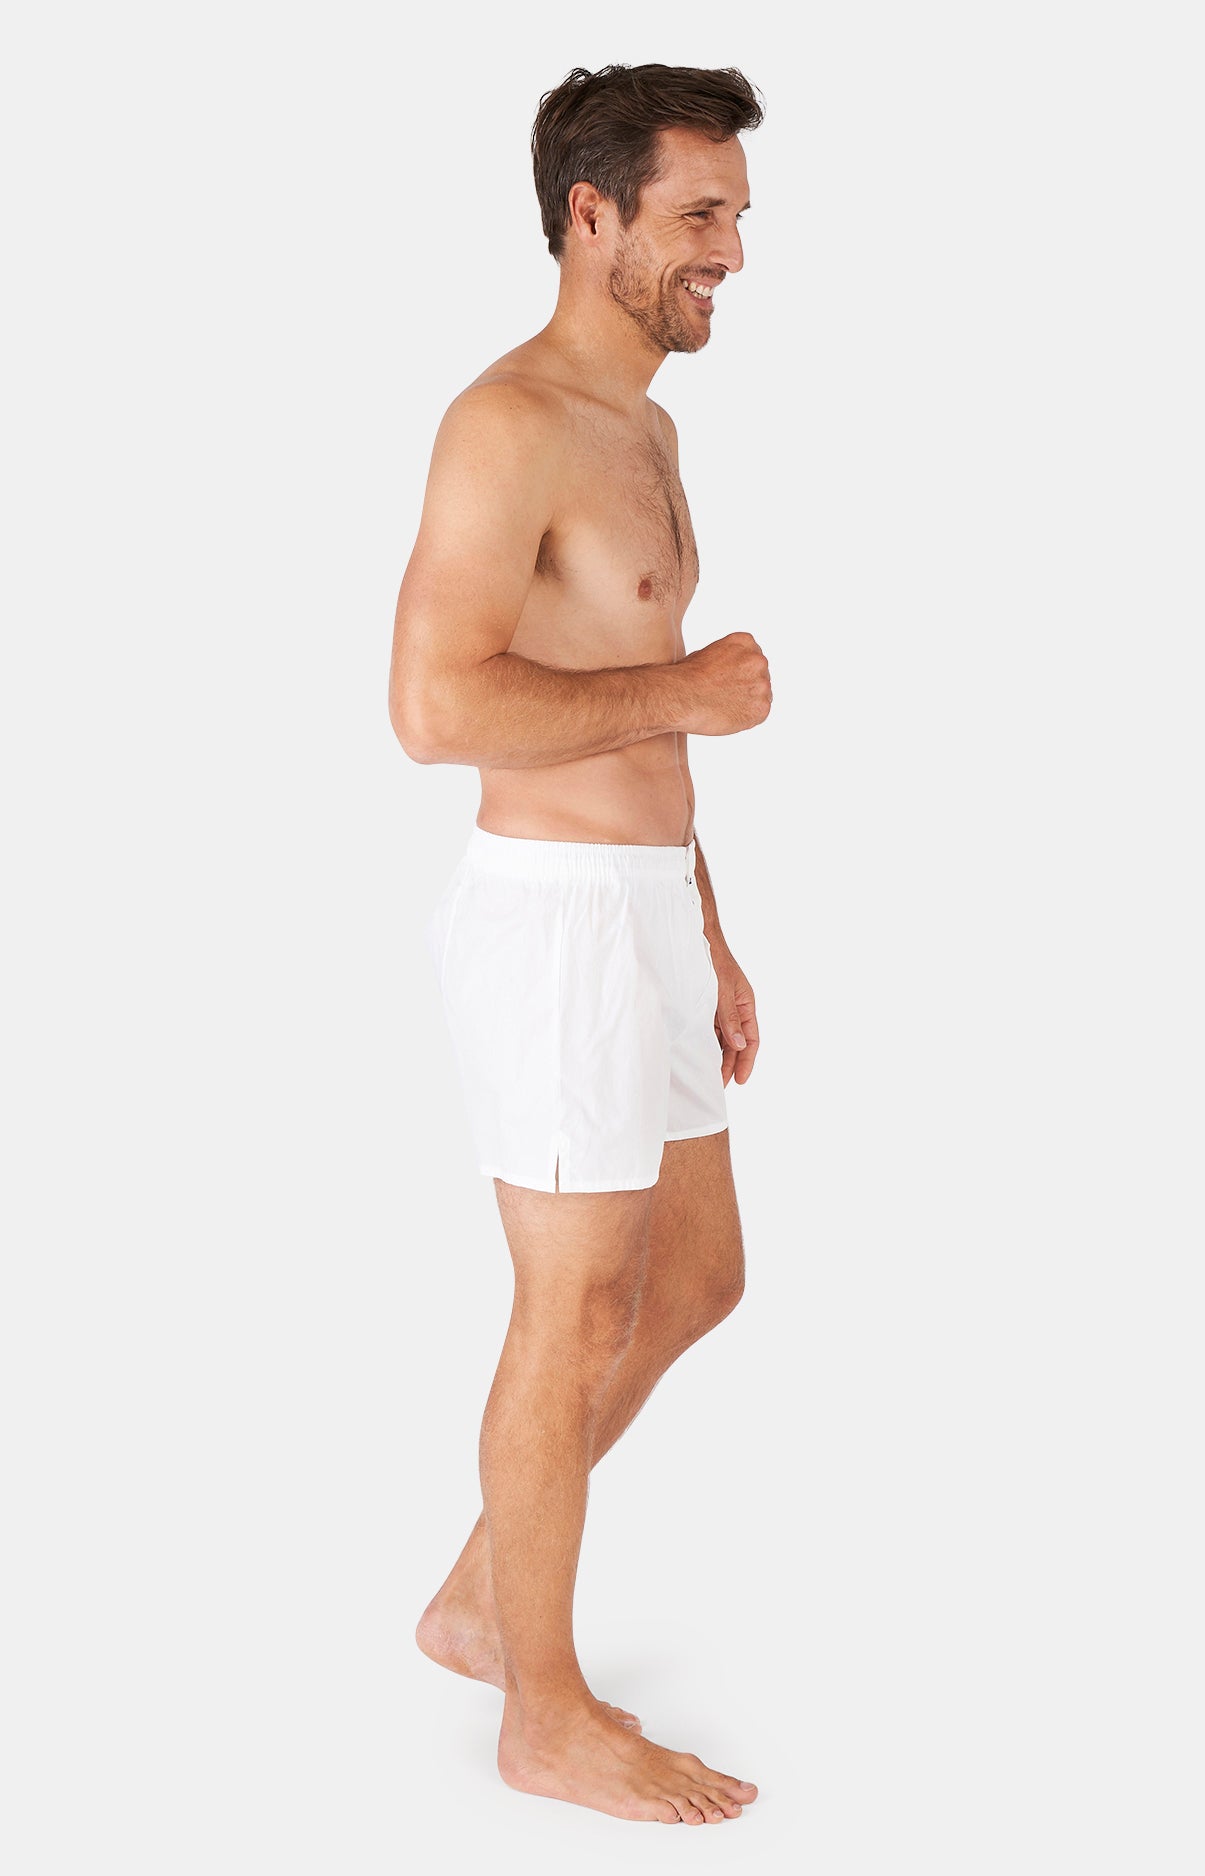 Boxer shorts with jockstrap - Le Club n°001